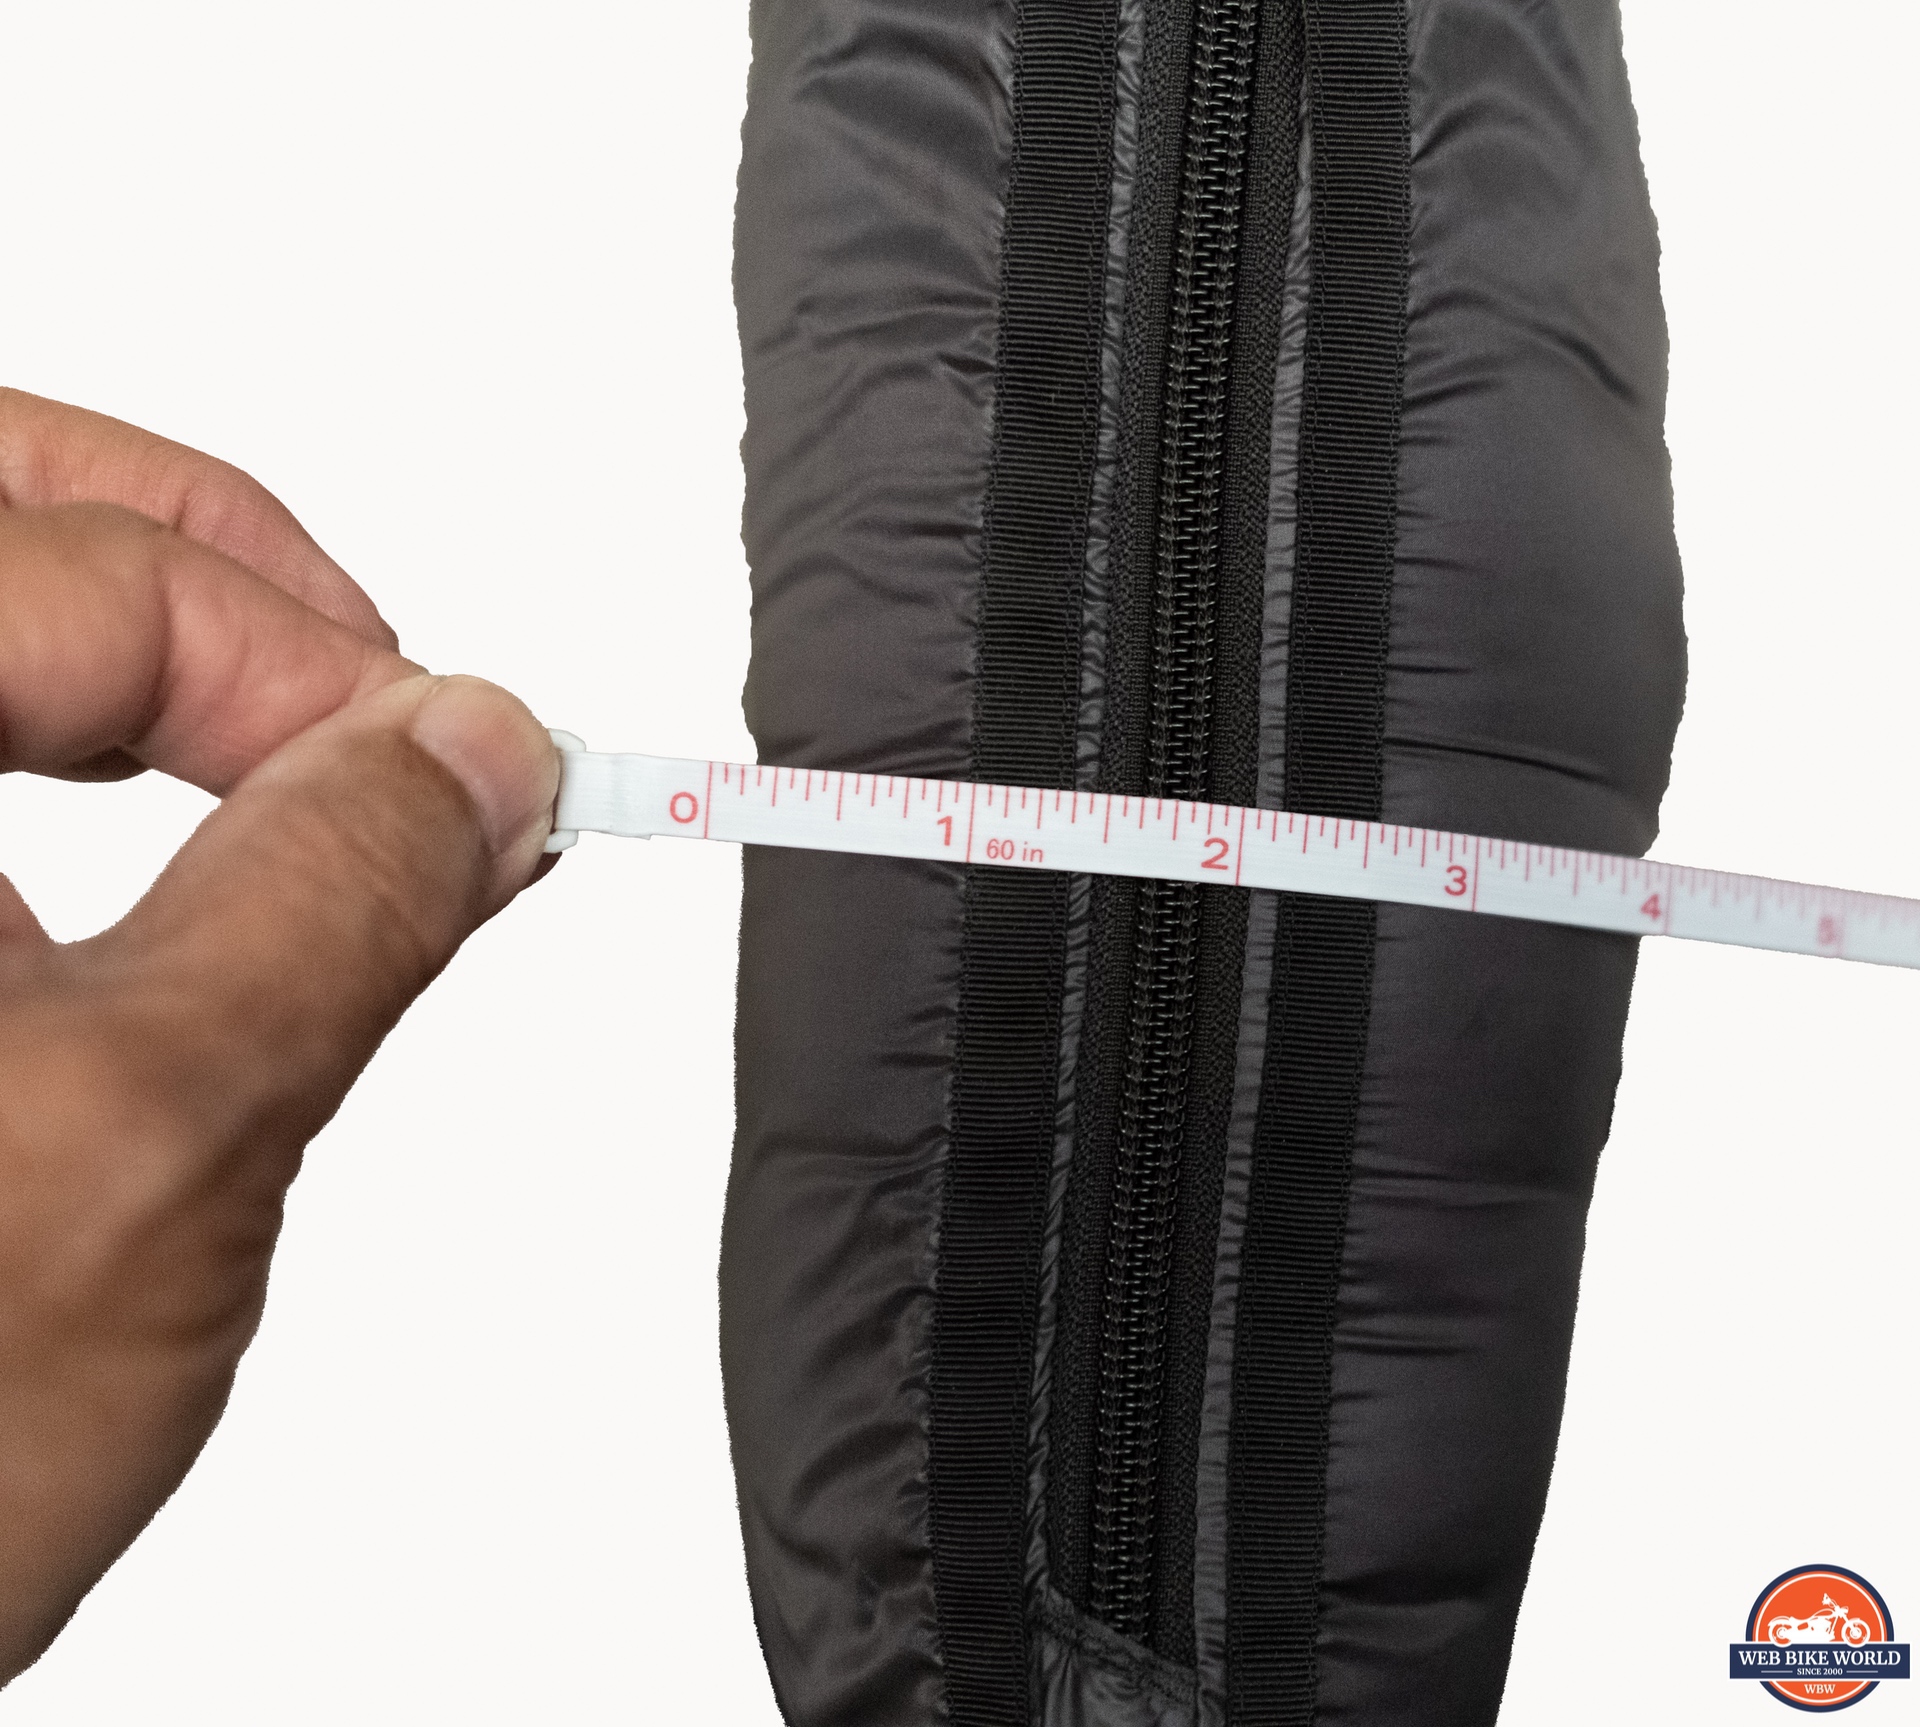 Measurment of packed Klim Maverick Down Jacket